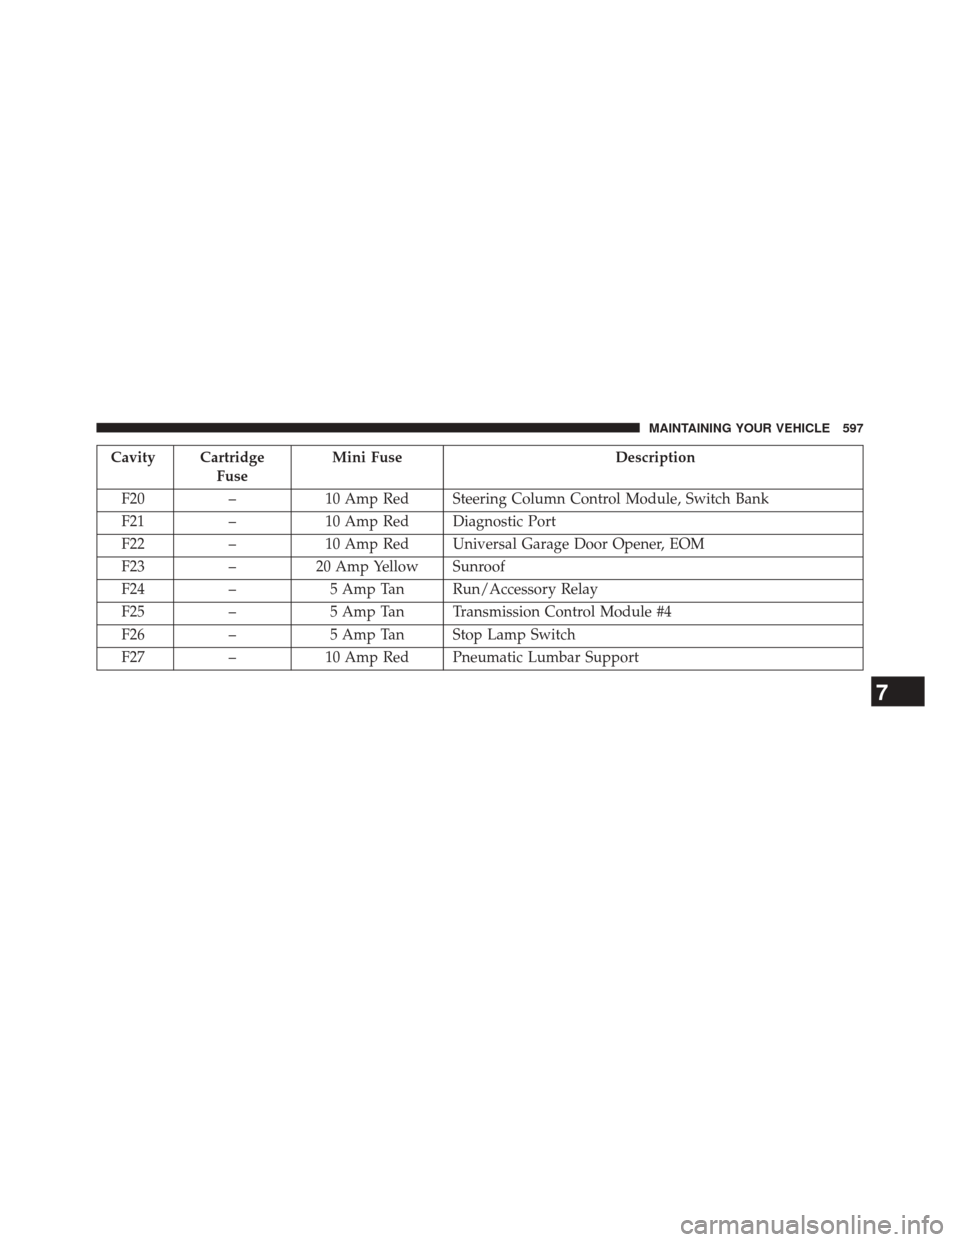 DODGE DART 2014 PF / 1.G Owners Manual Cavity CartridgeFuse Mini Fuse
Description
F20 –10 Amp Red Steering Column Control Module, Switch Bank
F21 –10 Amp Red Diagnostic Port
F22 –10 Amp Red Universal Garage Door Opener, EOM
F23 –20